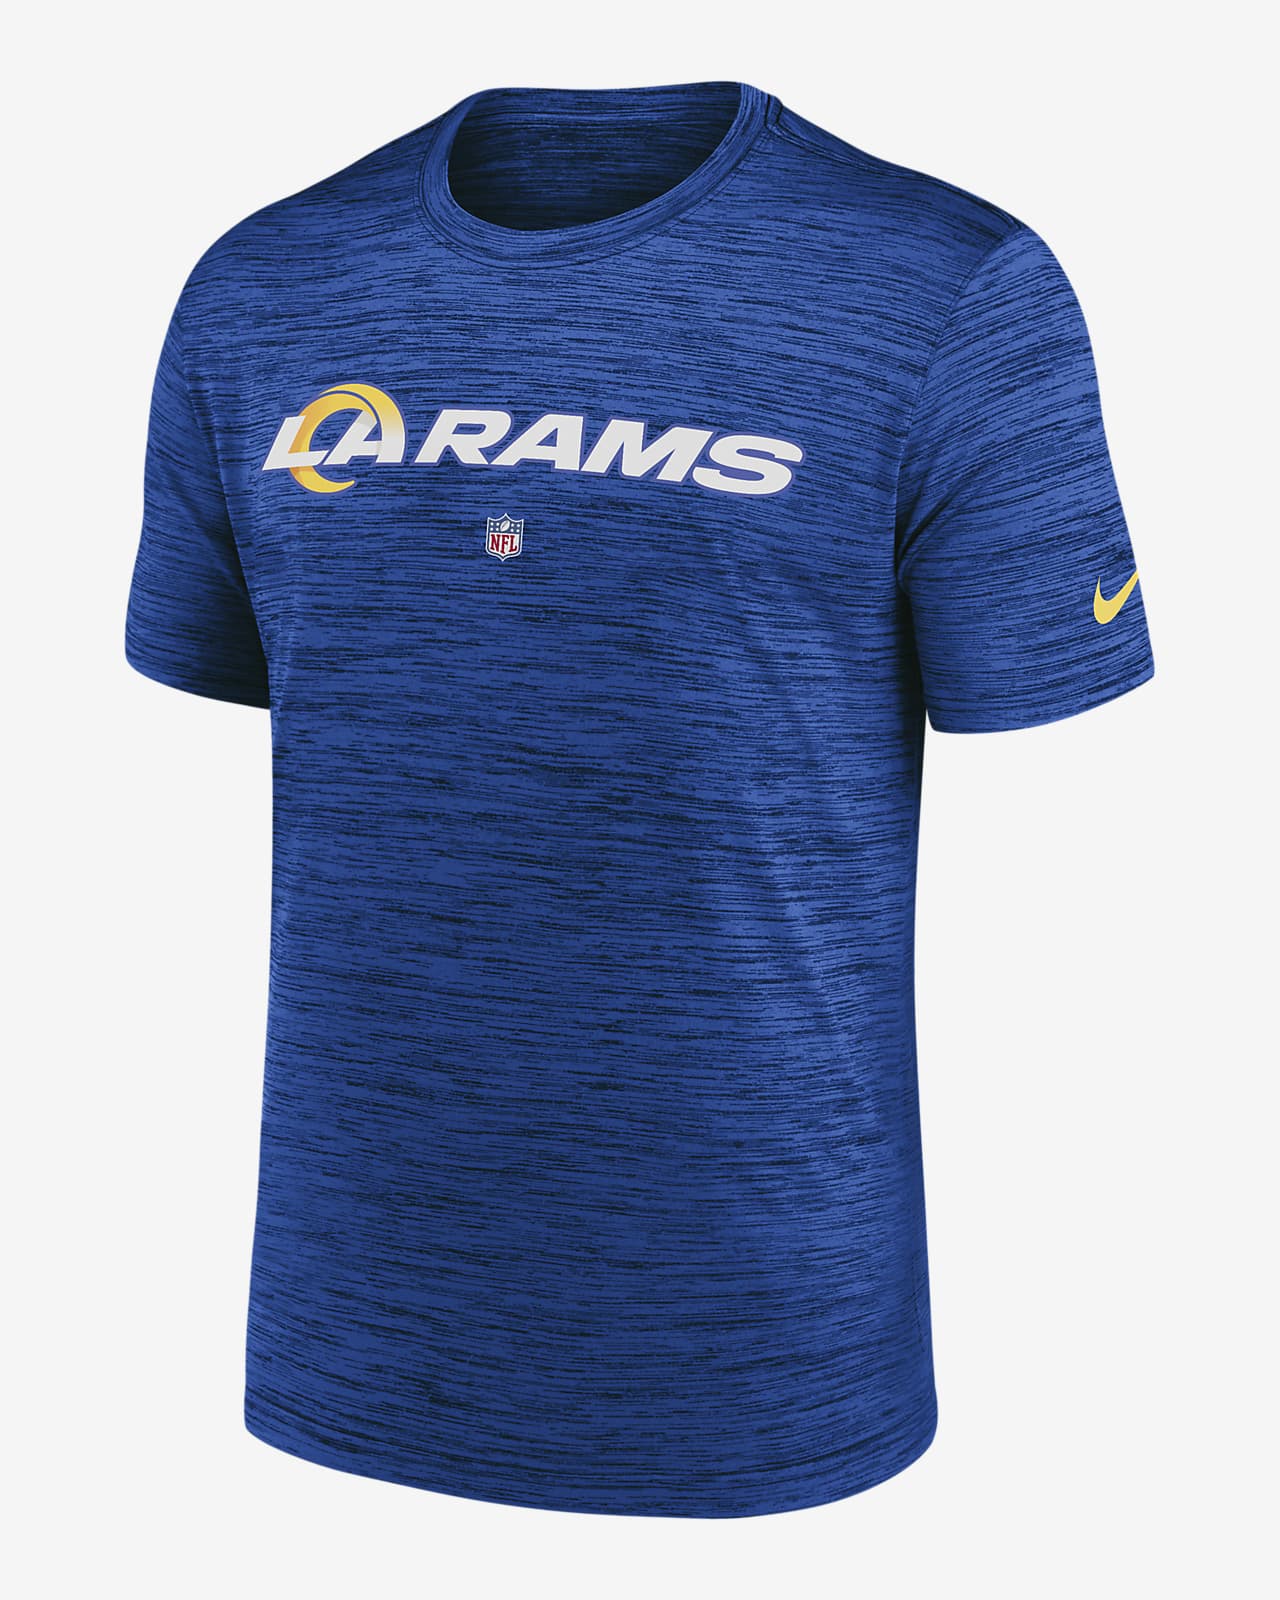 NFL TEAM APPAREL Men's St. Louis Rams Tee Shirt - L